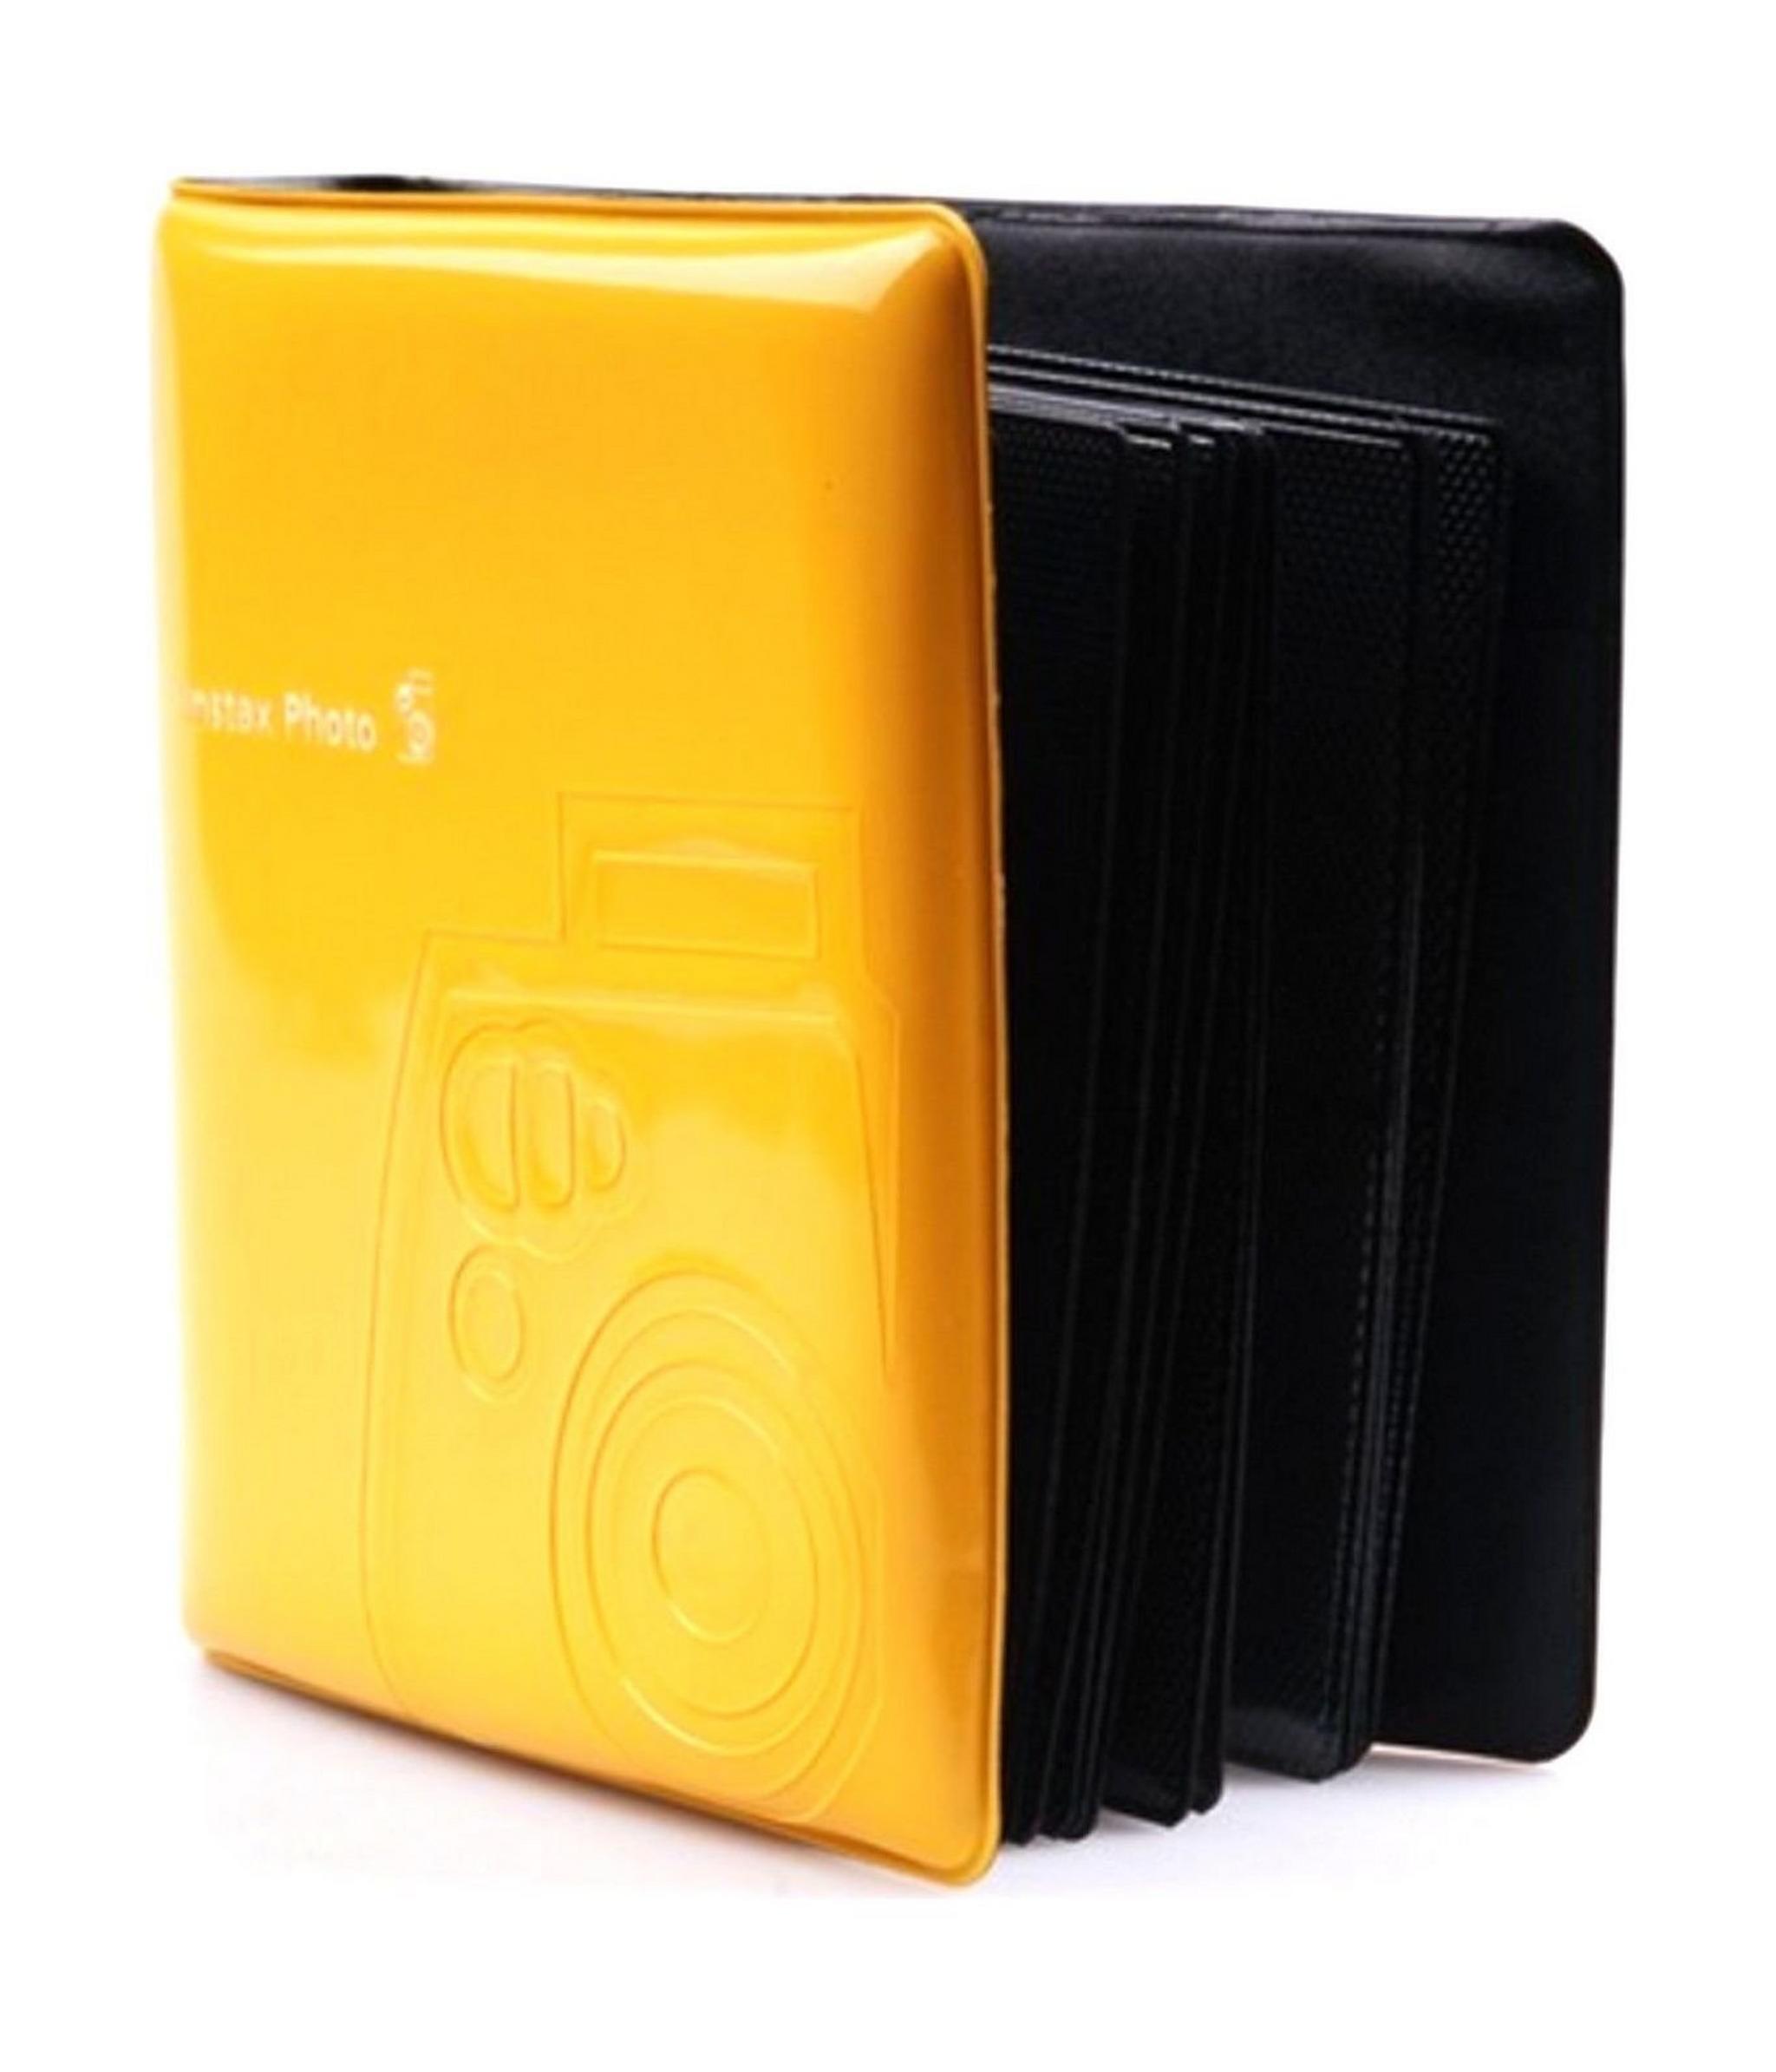 Fuji Instax Mini 8 Photo Album - Yellow